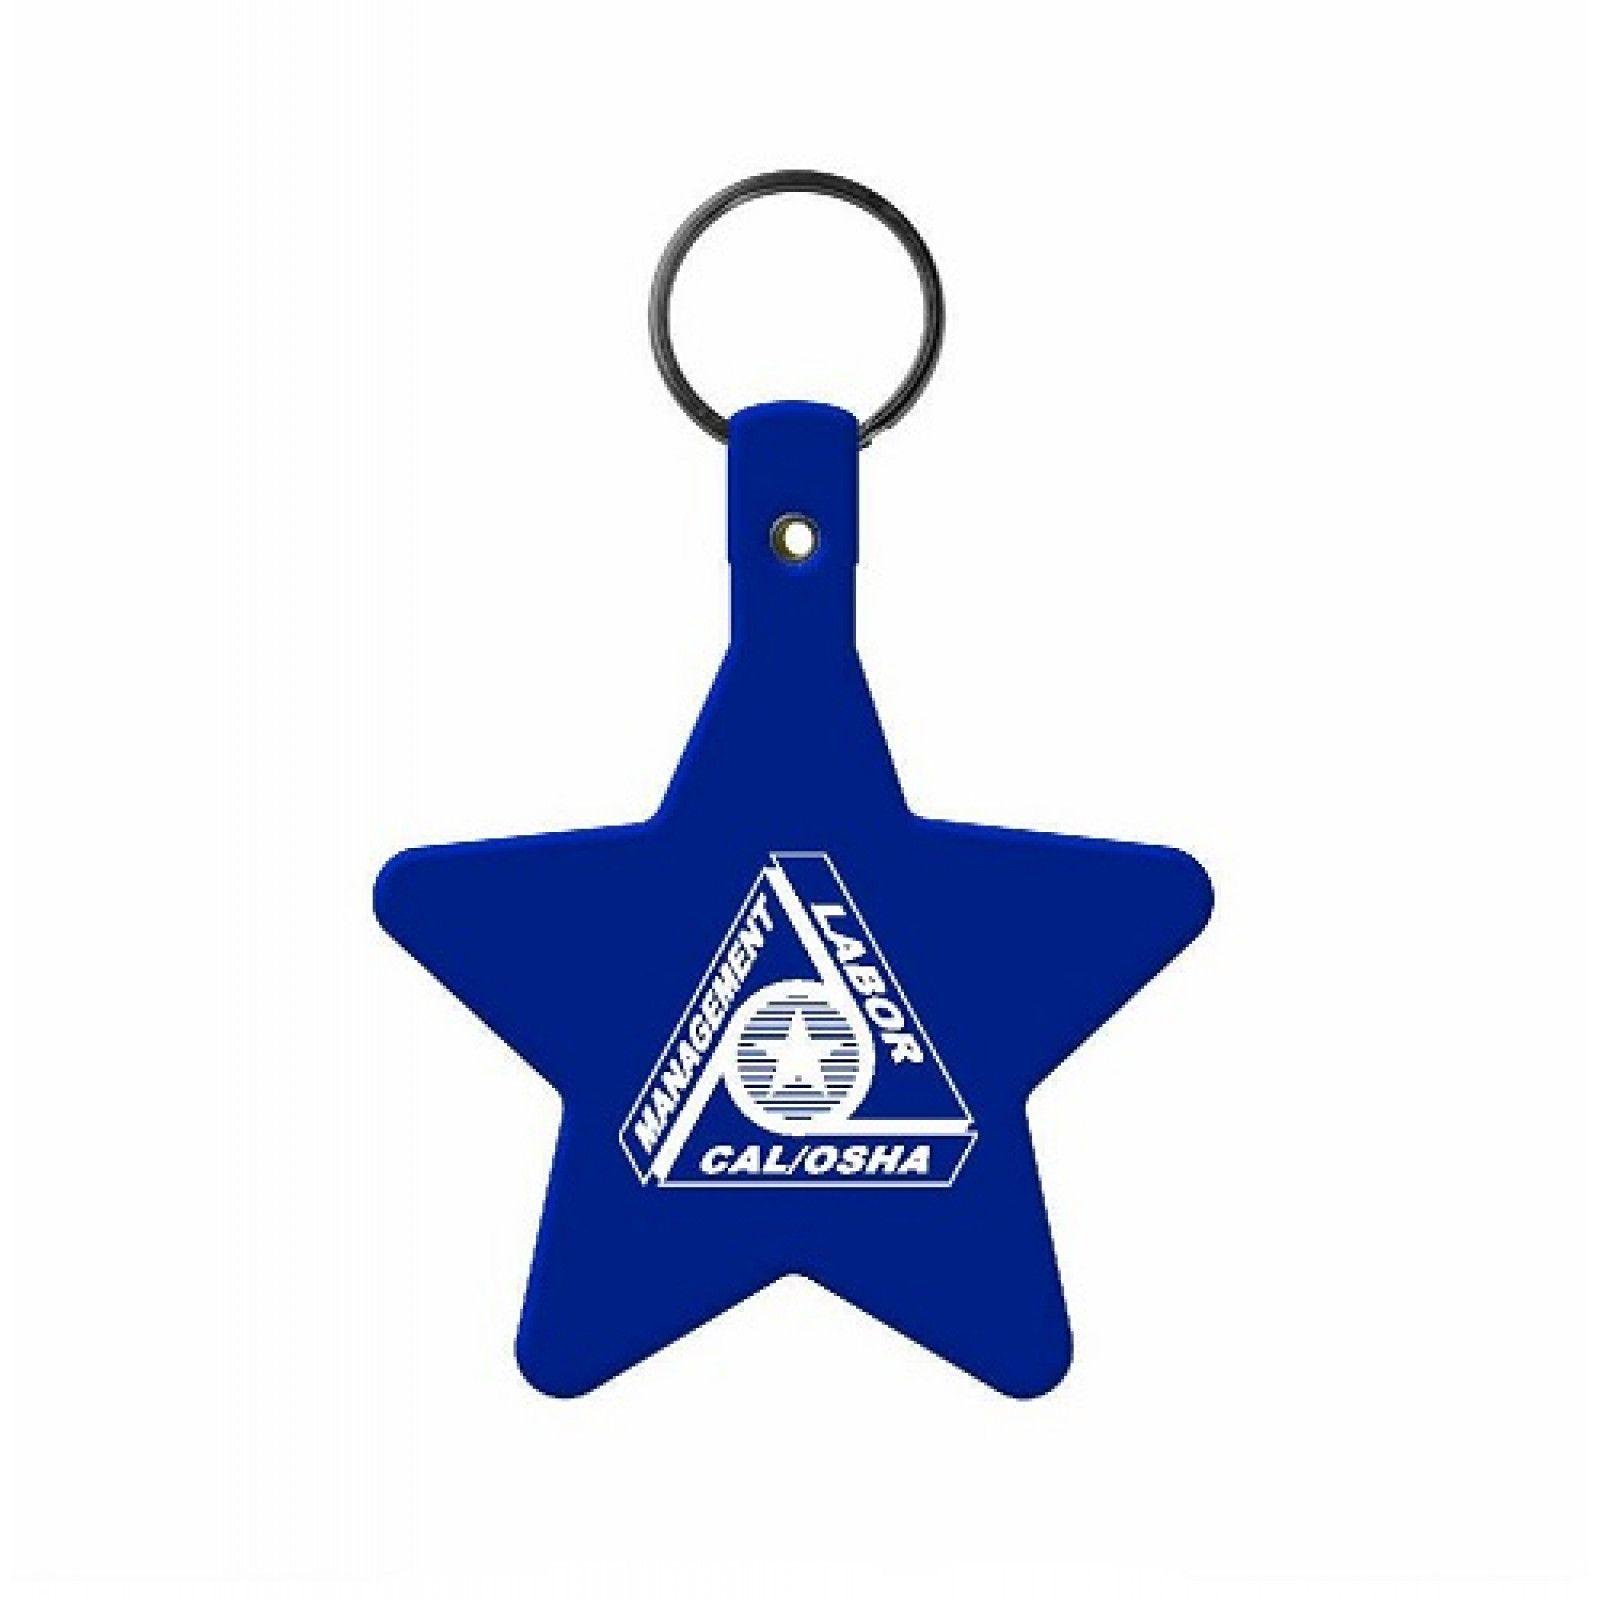 OSHA Logo - SafetyAwardSource.com Blue Star Flexible Key Tag With CAL OSHA Logo